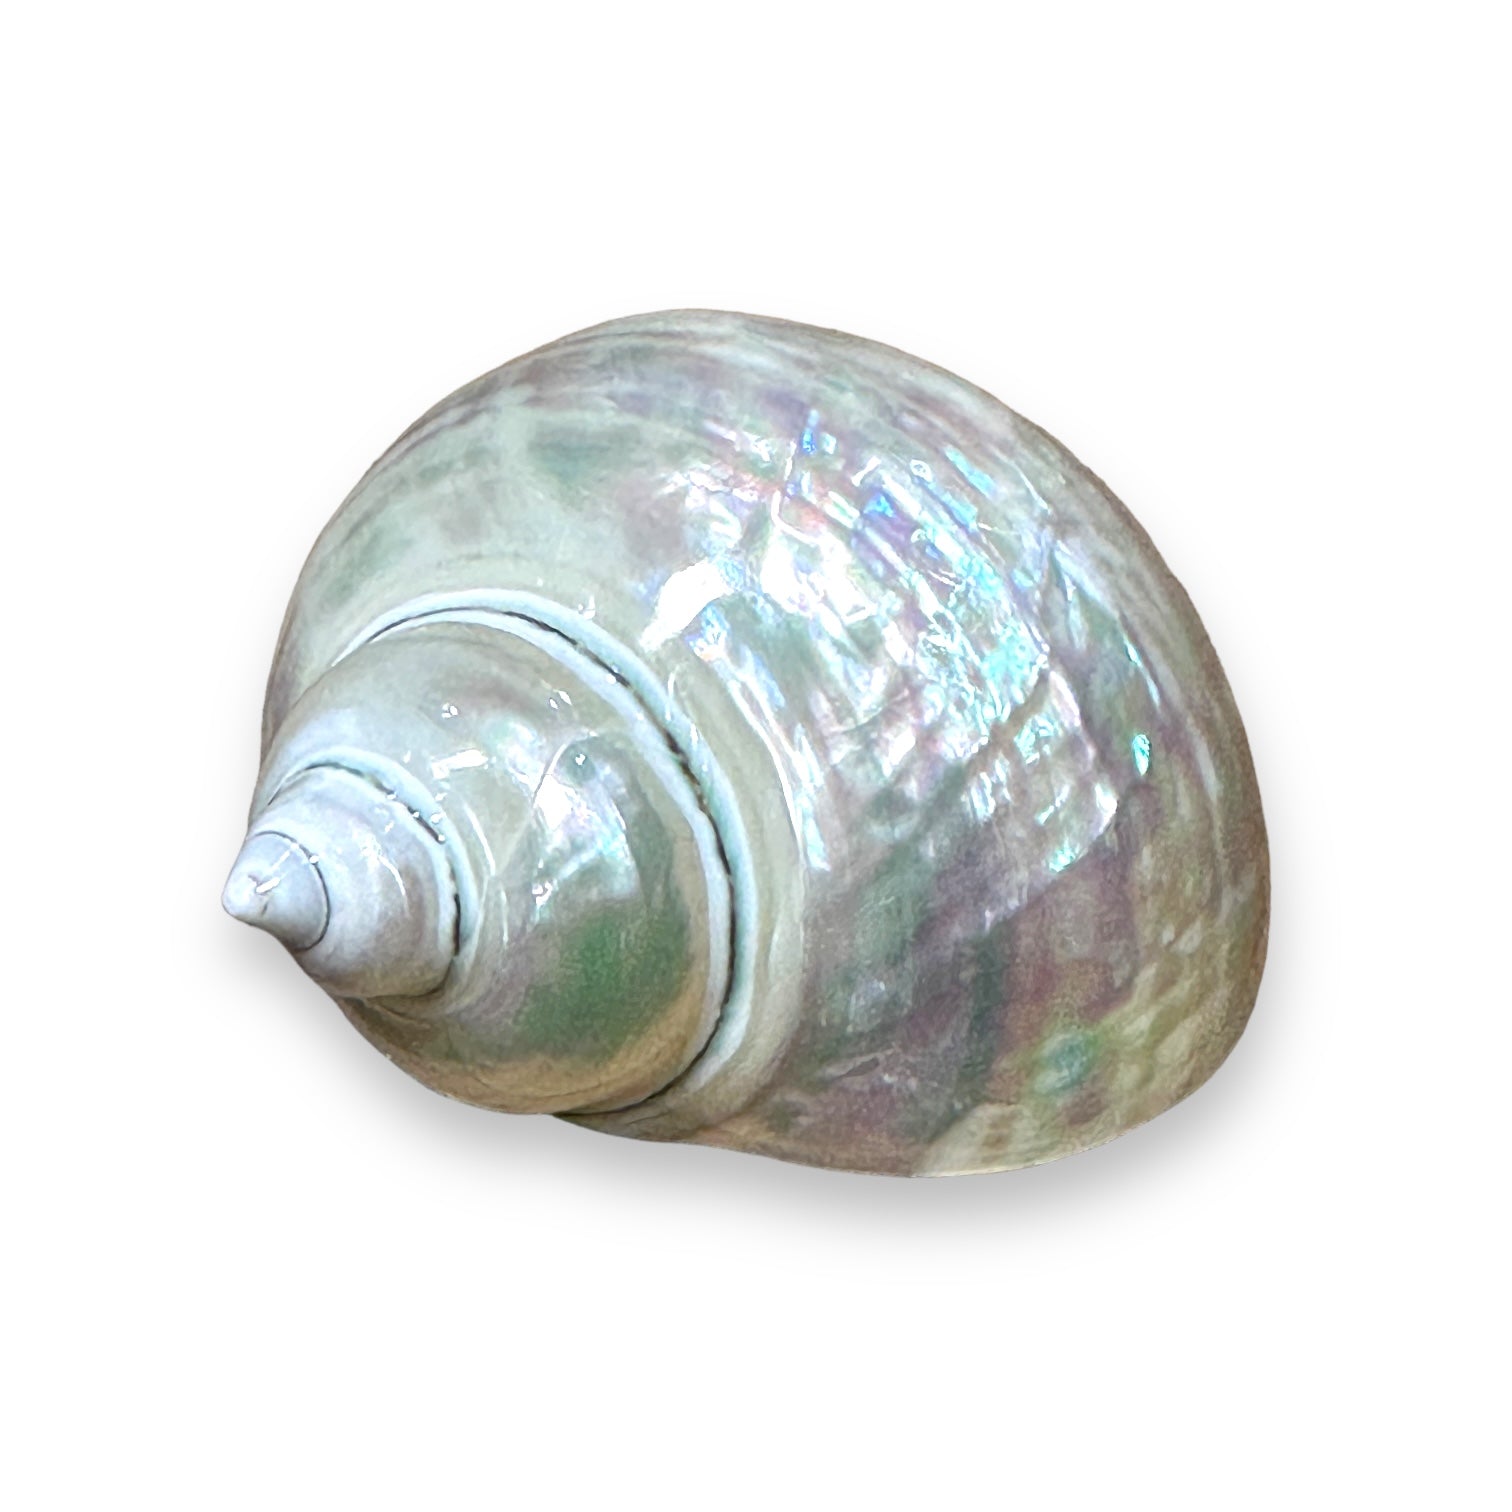 Seashell Dish - Blush - Coastal Inspired